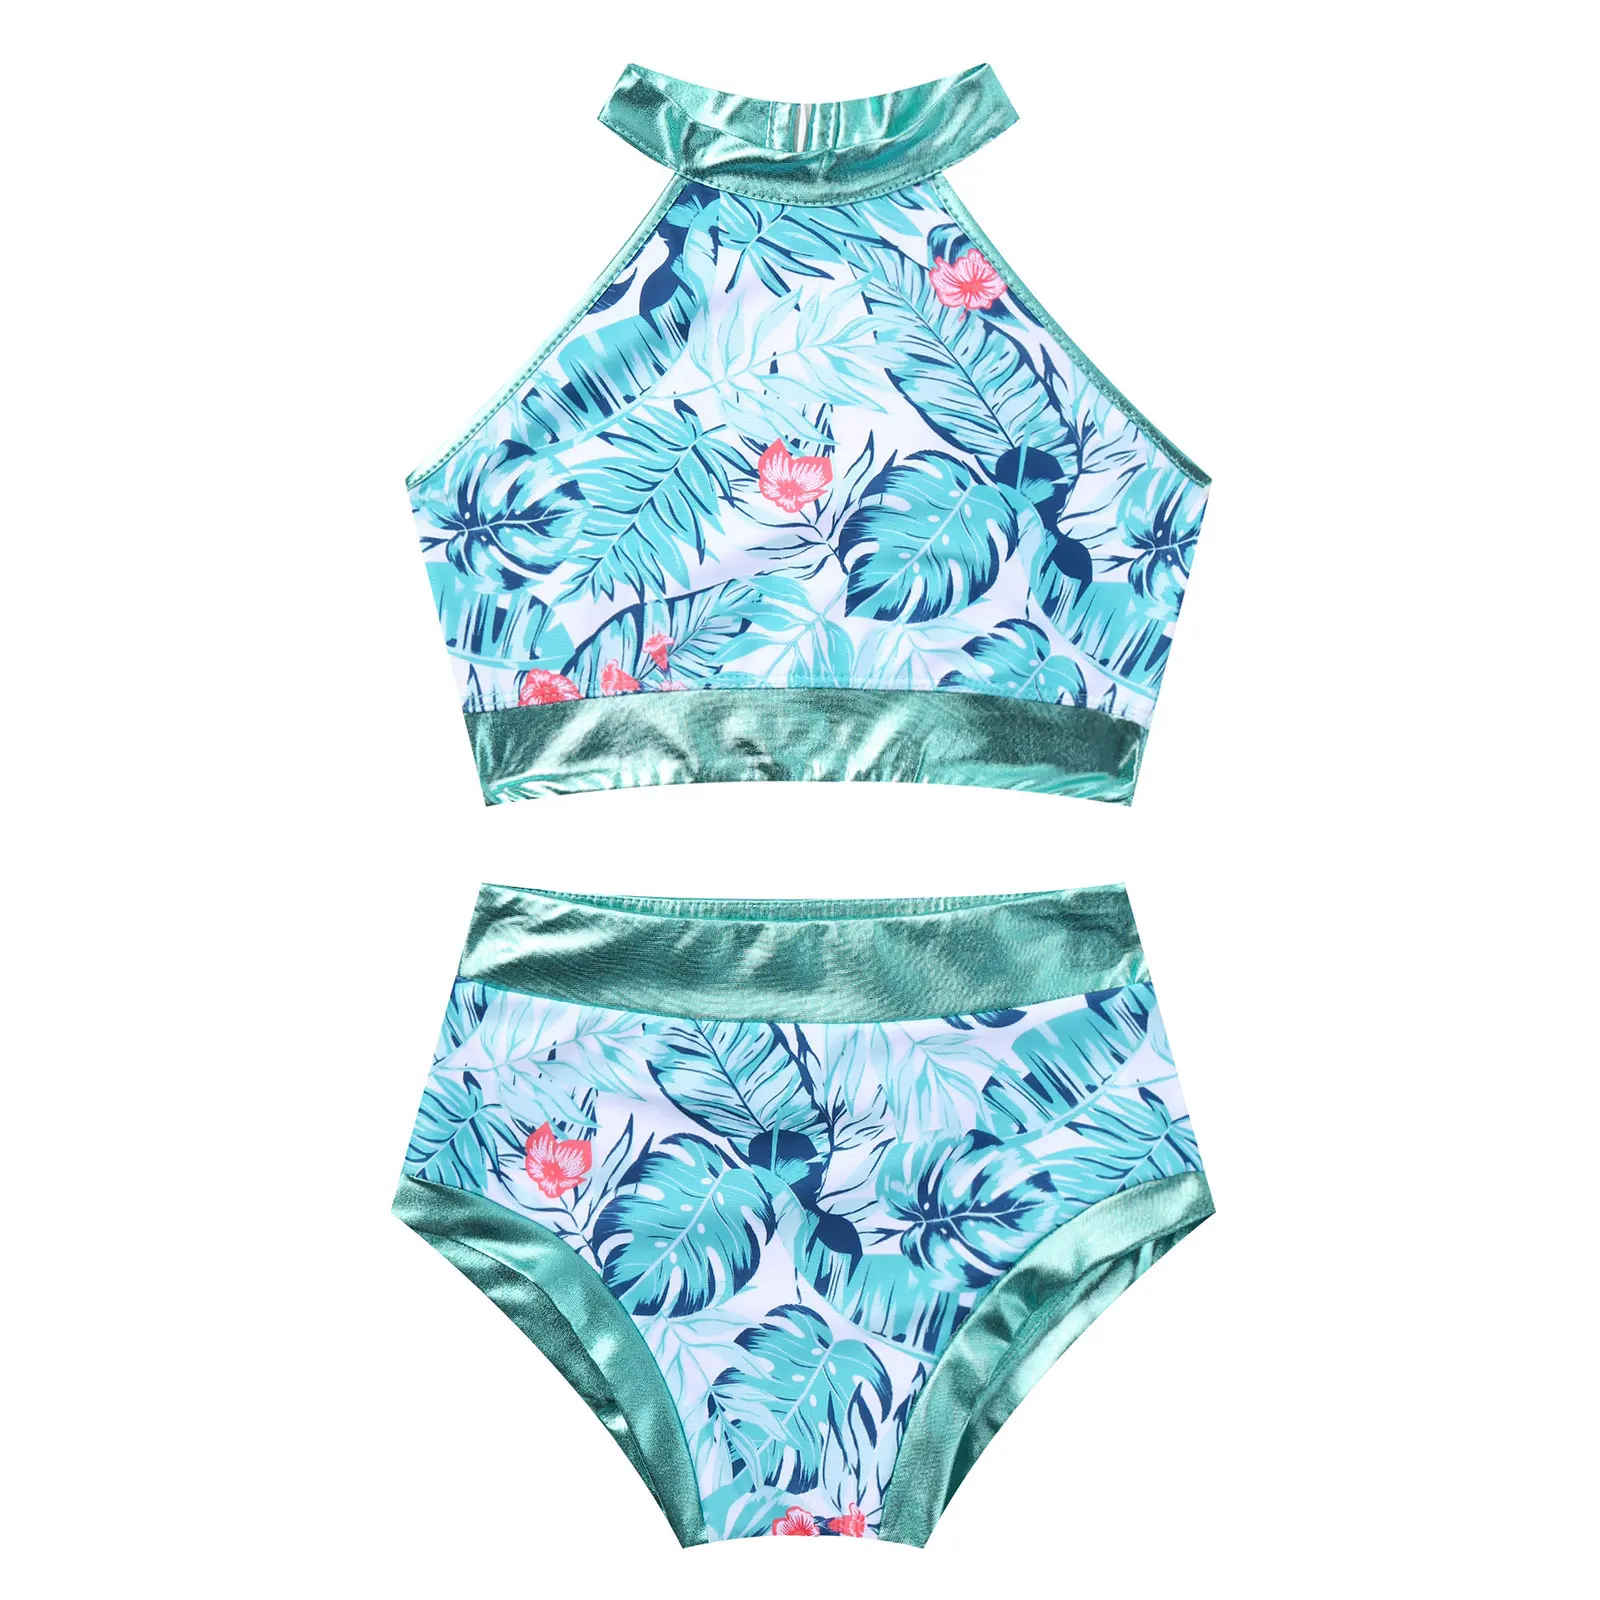 

2PCS Kids Girls Swimming Outfit Swimwear Beachwear Tankini Palm Leaves Print Swimsuit Bathing Suit Bikini Top with Bottoms Set